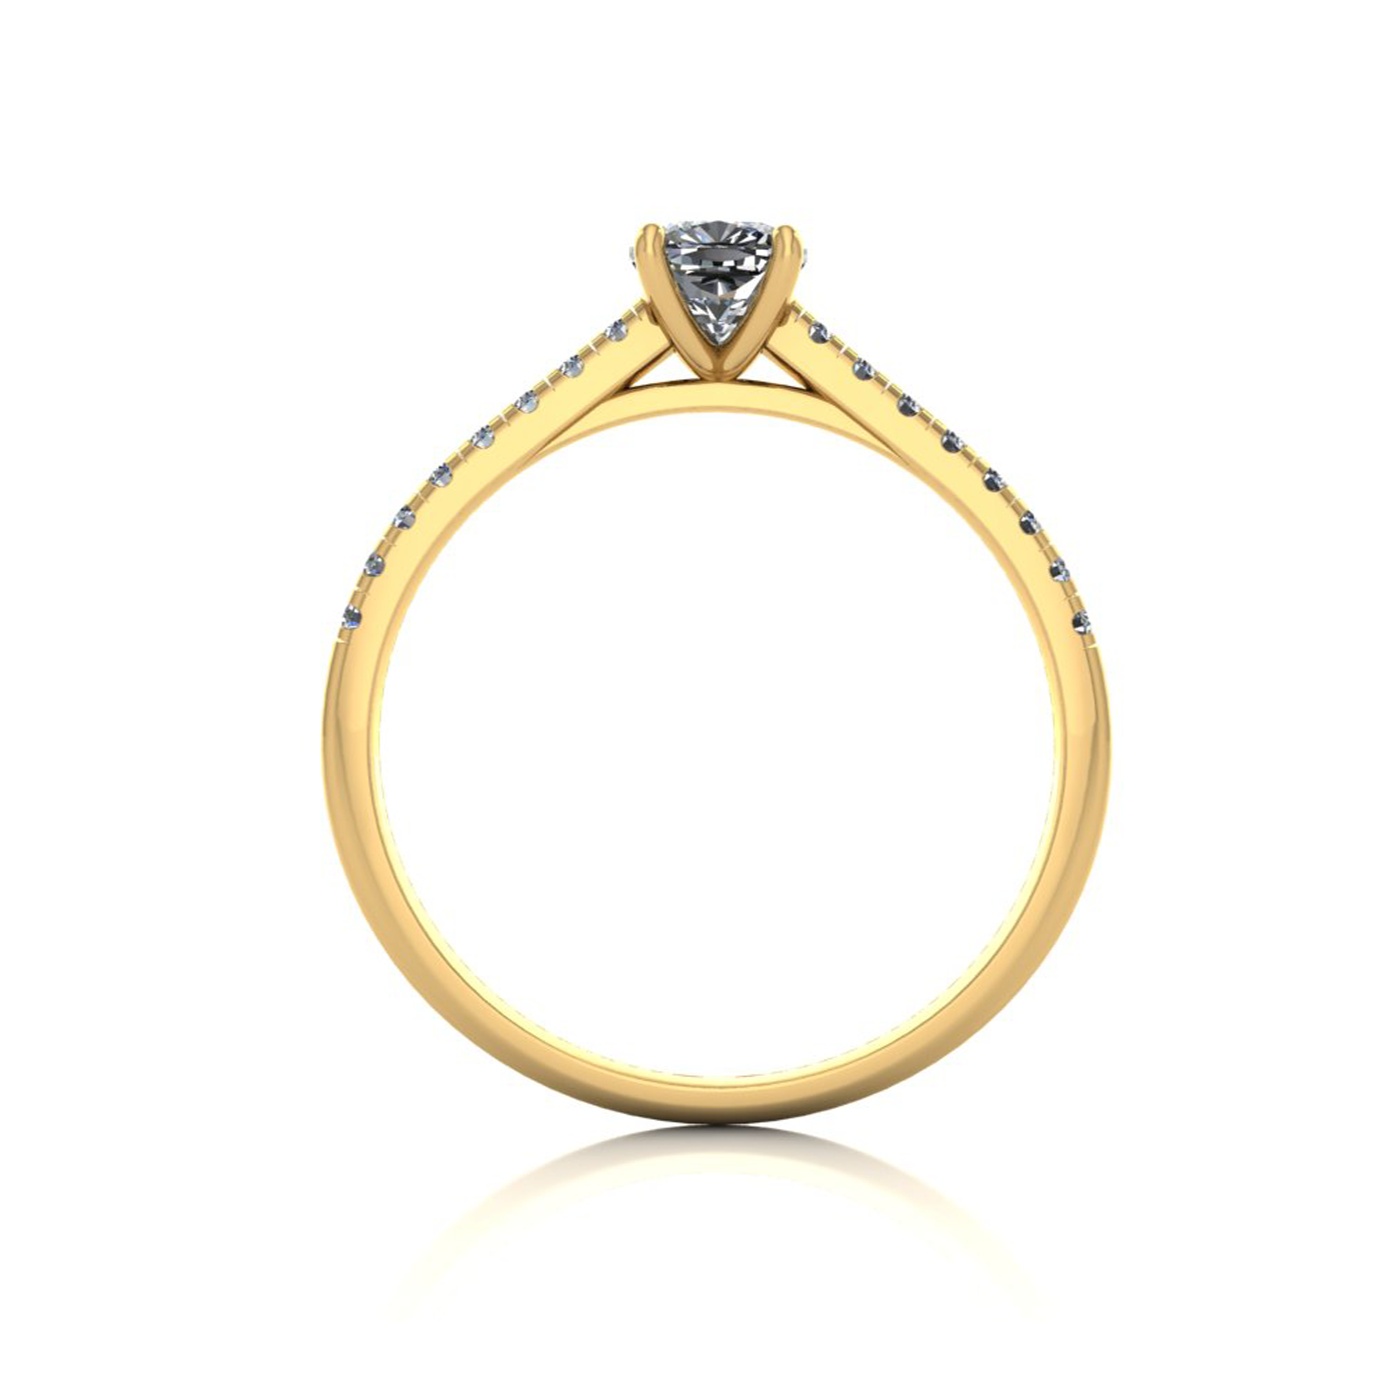 18k yellow gold  0,50 ct 4 prongs cushion cut diamond engagement ring with whisper thin pavÉ set band